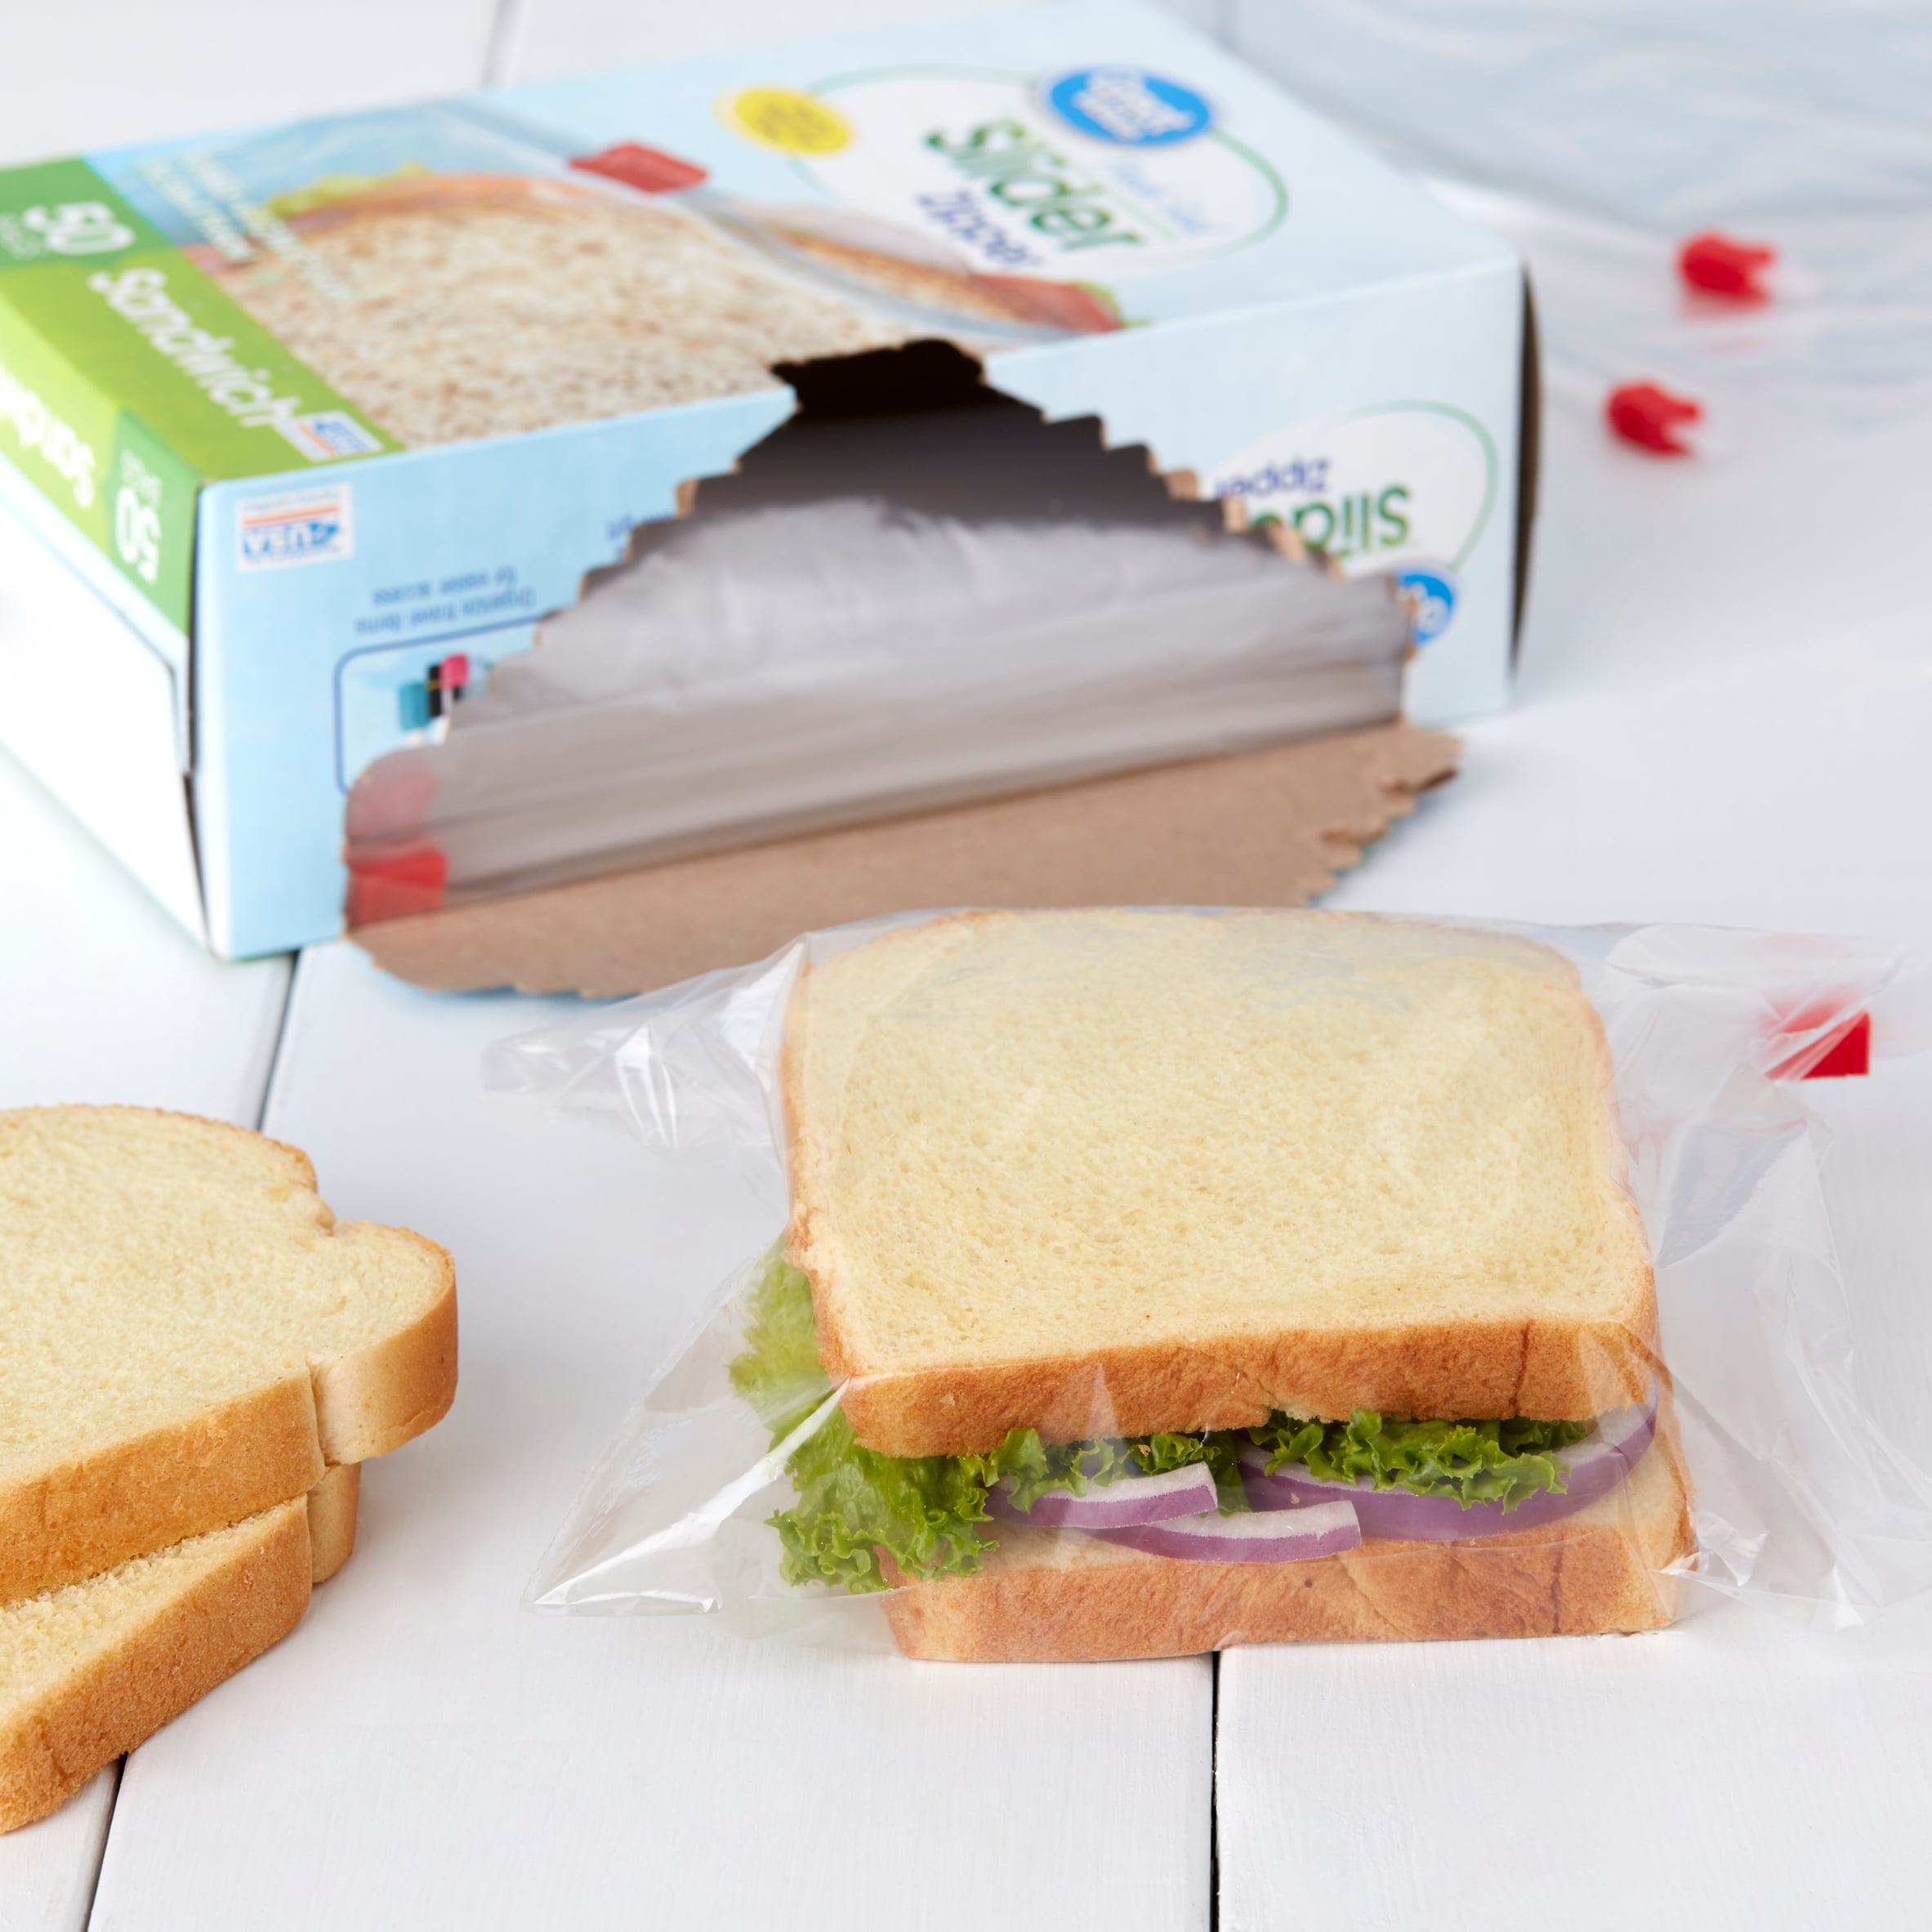 Basically, Sandwich Bags 50ct